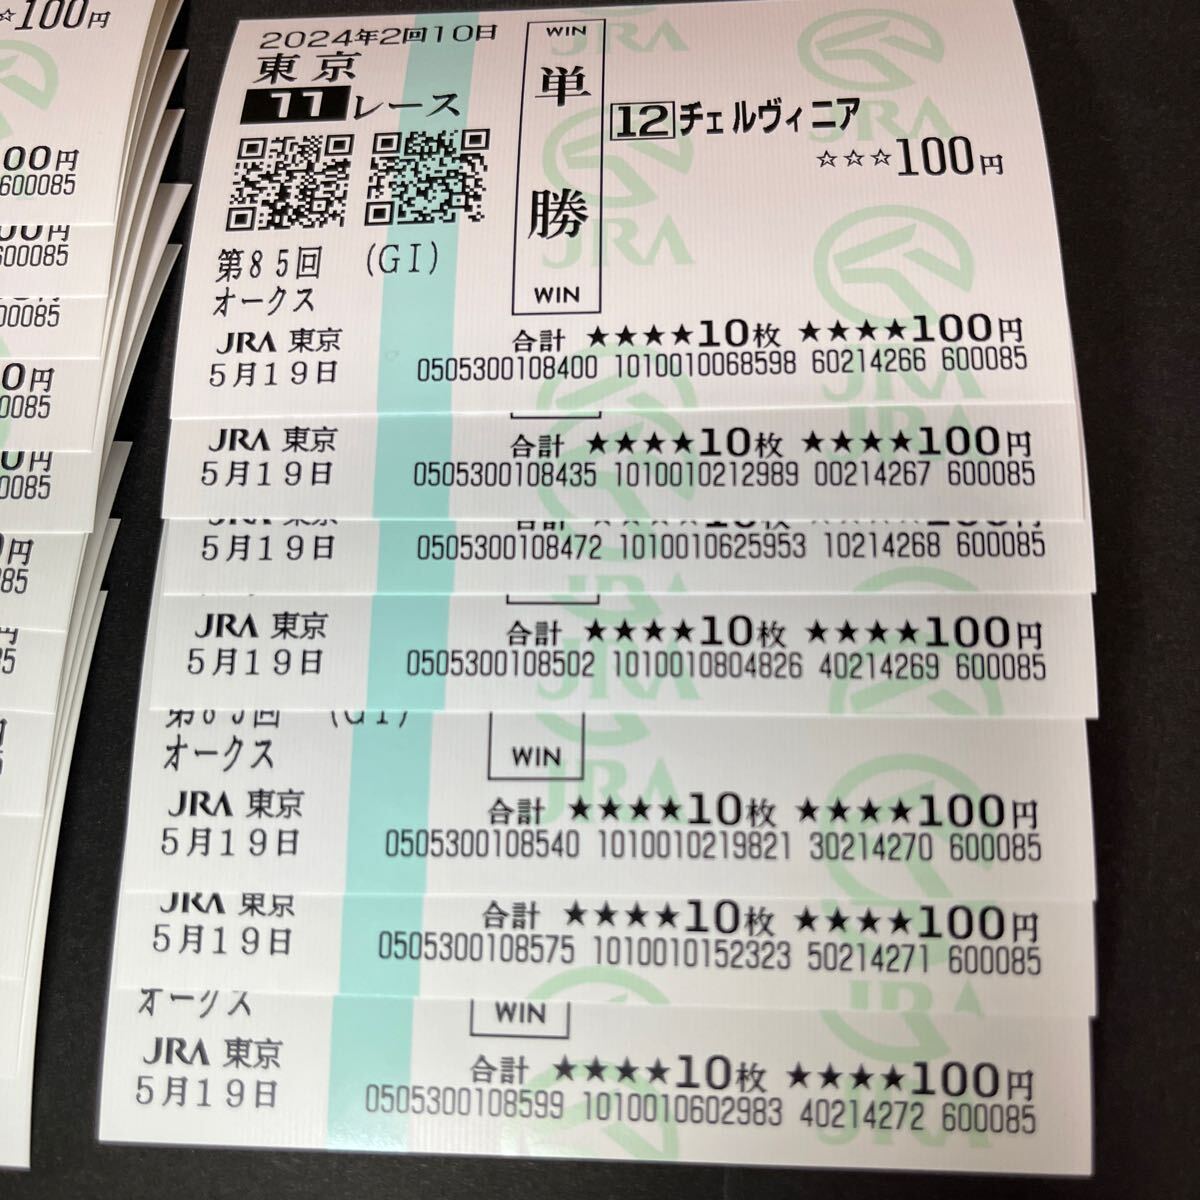  oak s Tokyo horse racing place all . mileage horse actual place single . horse ticket che ru vi nia